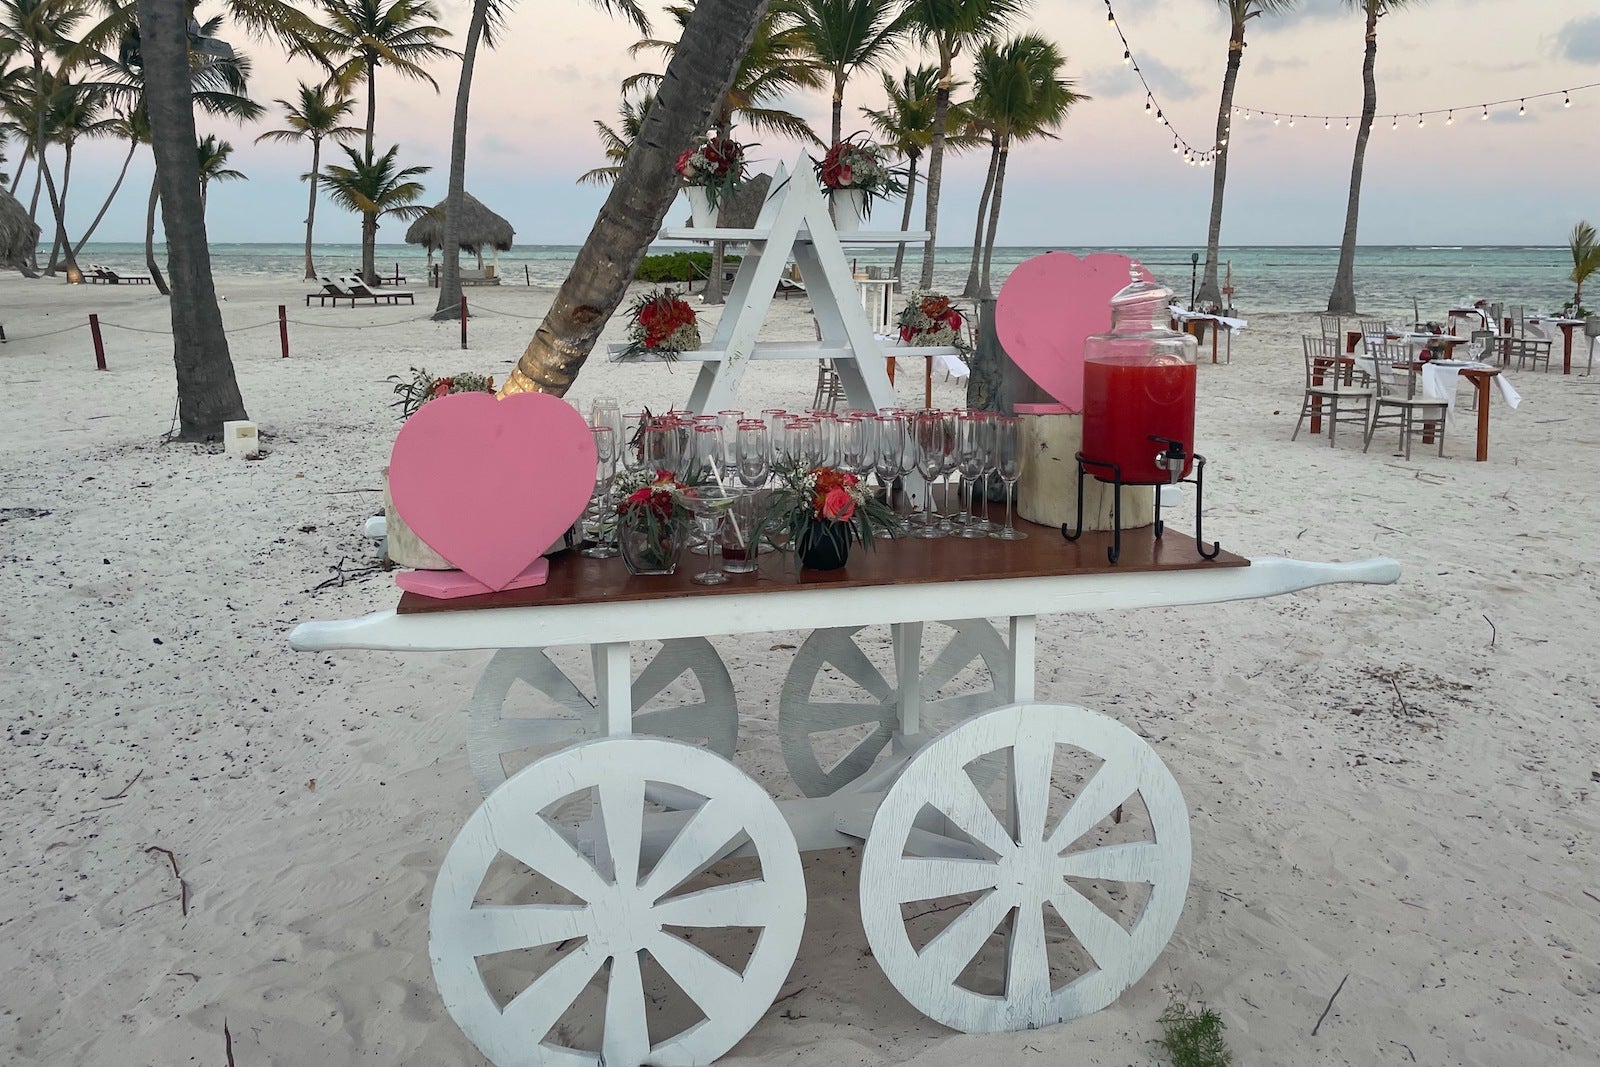 cart on beach with drinks